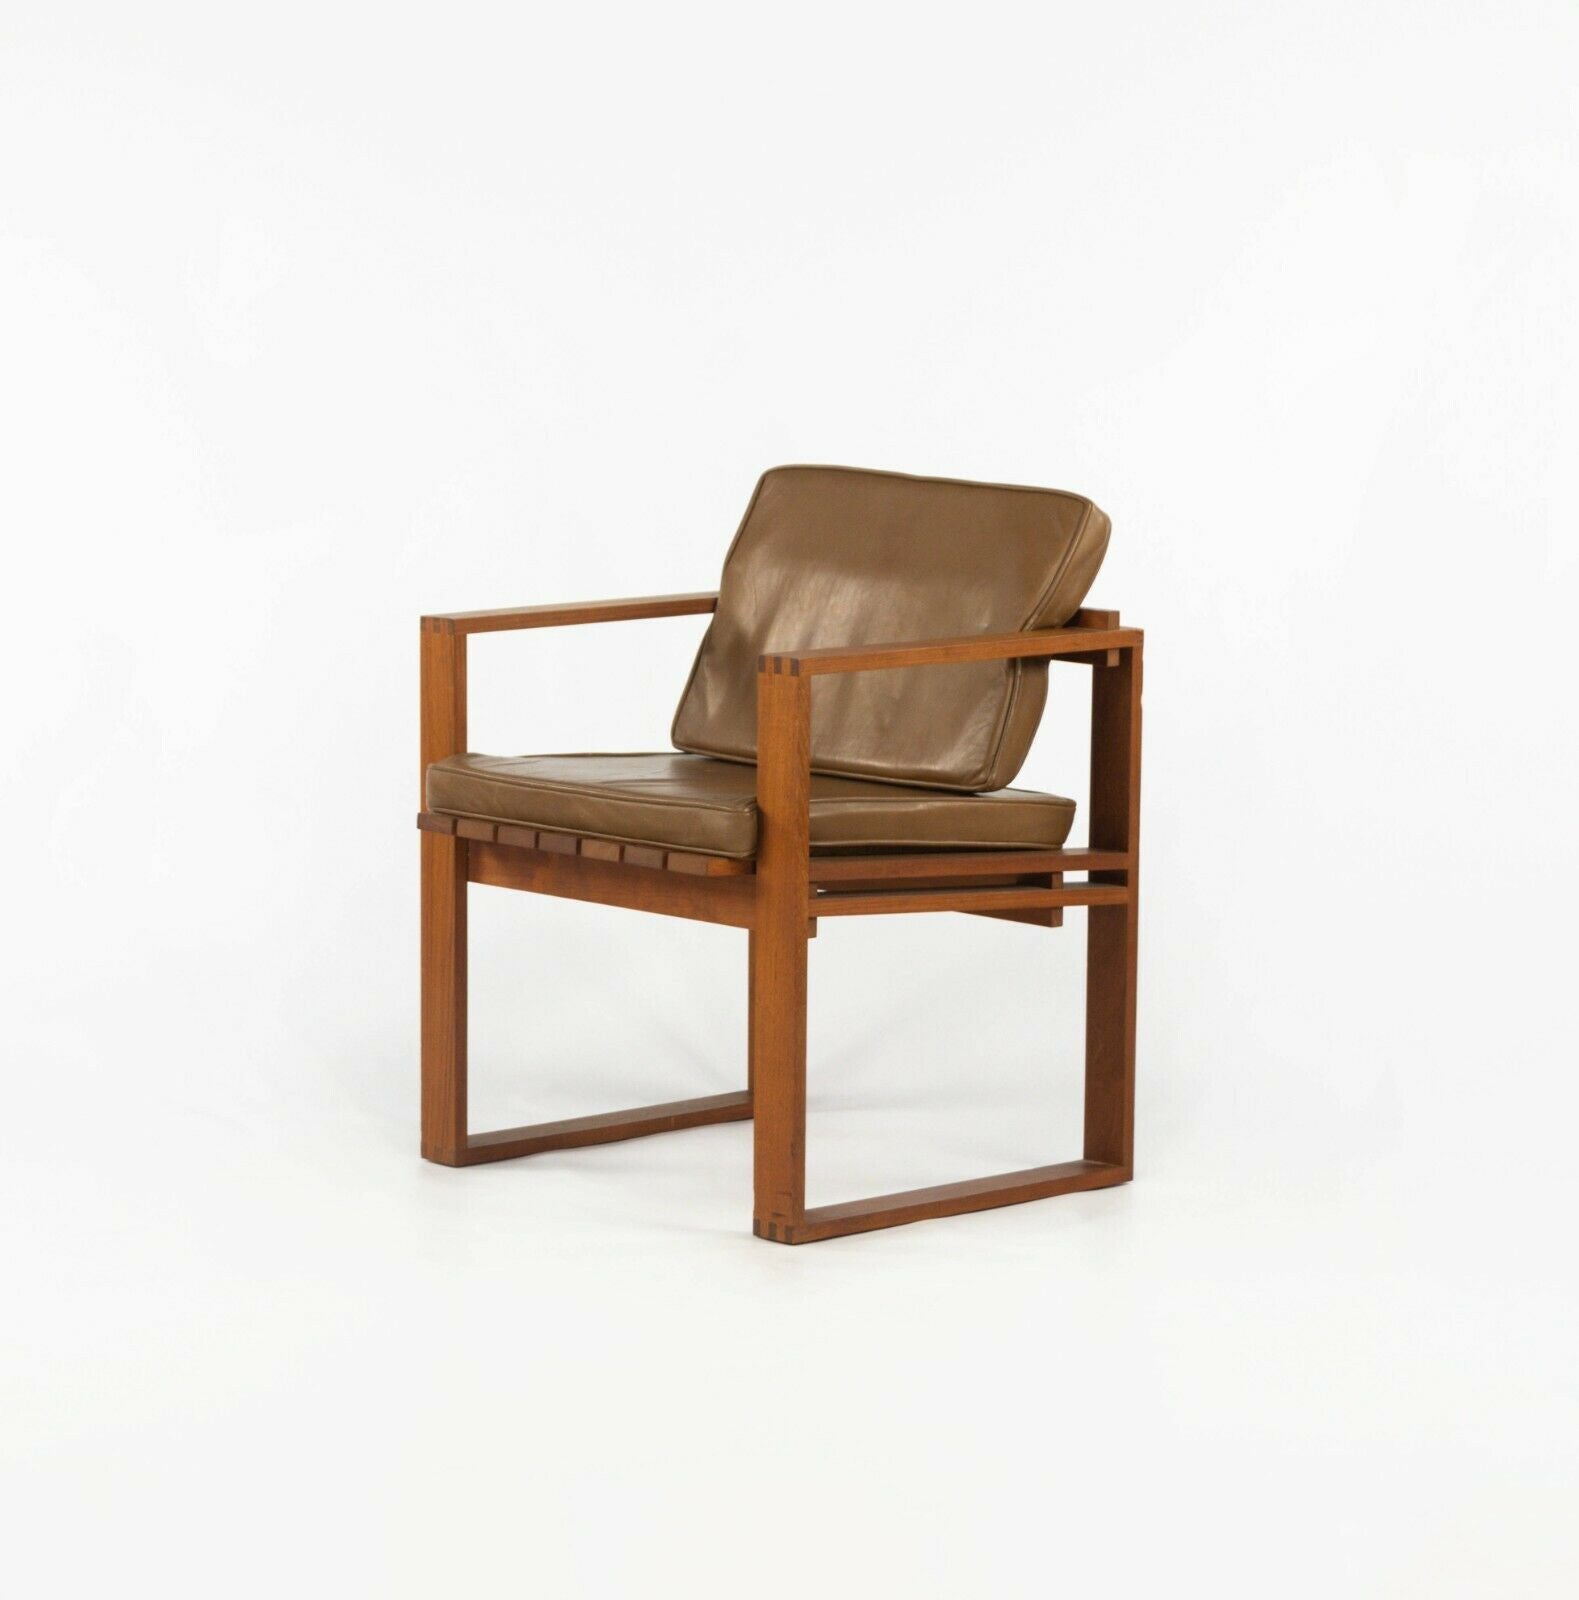 1975 Pair of Bodil Kjaer Teak & Leather Slat Seat Chairs by CI Designs of Boston